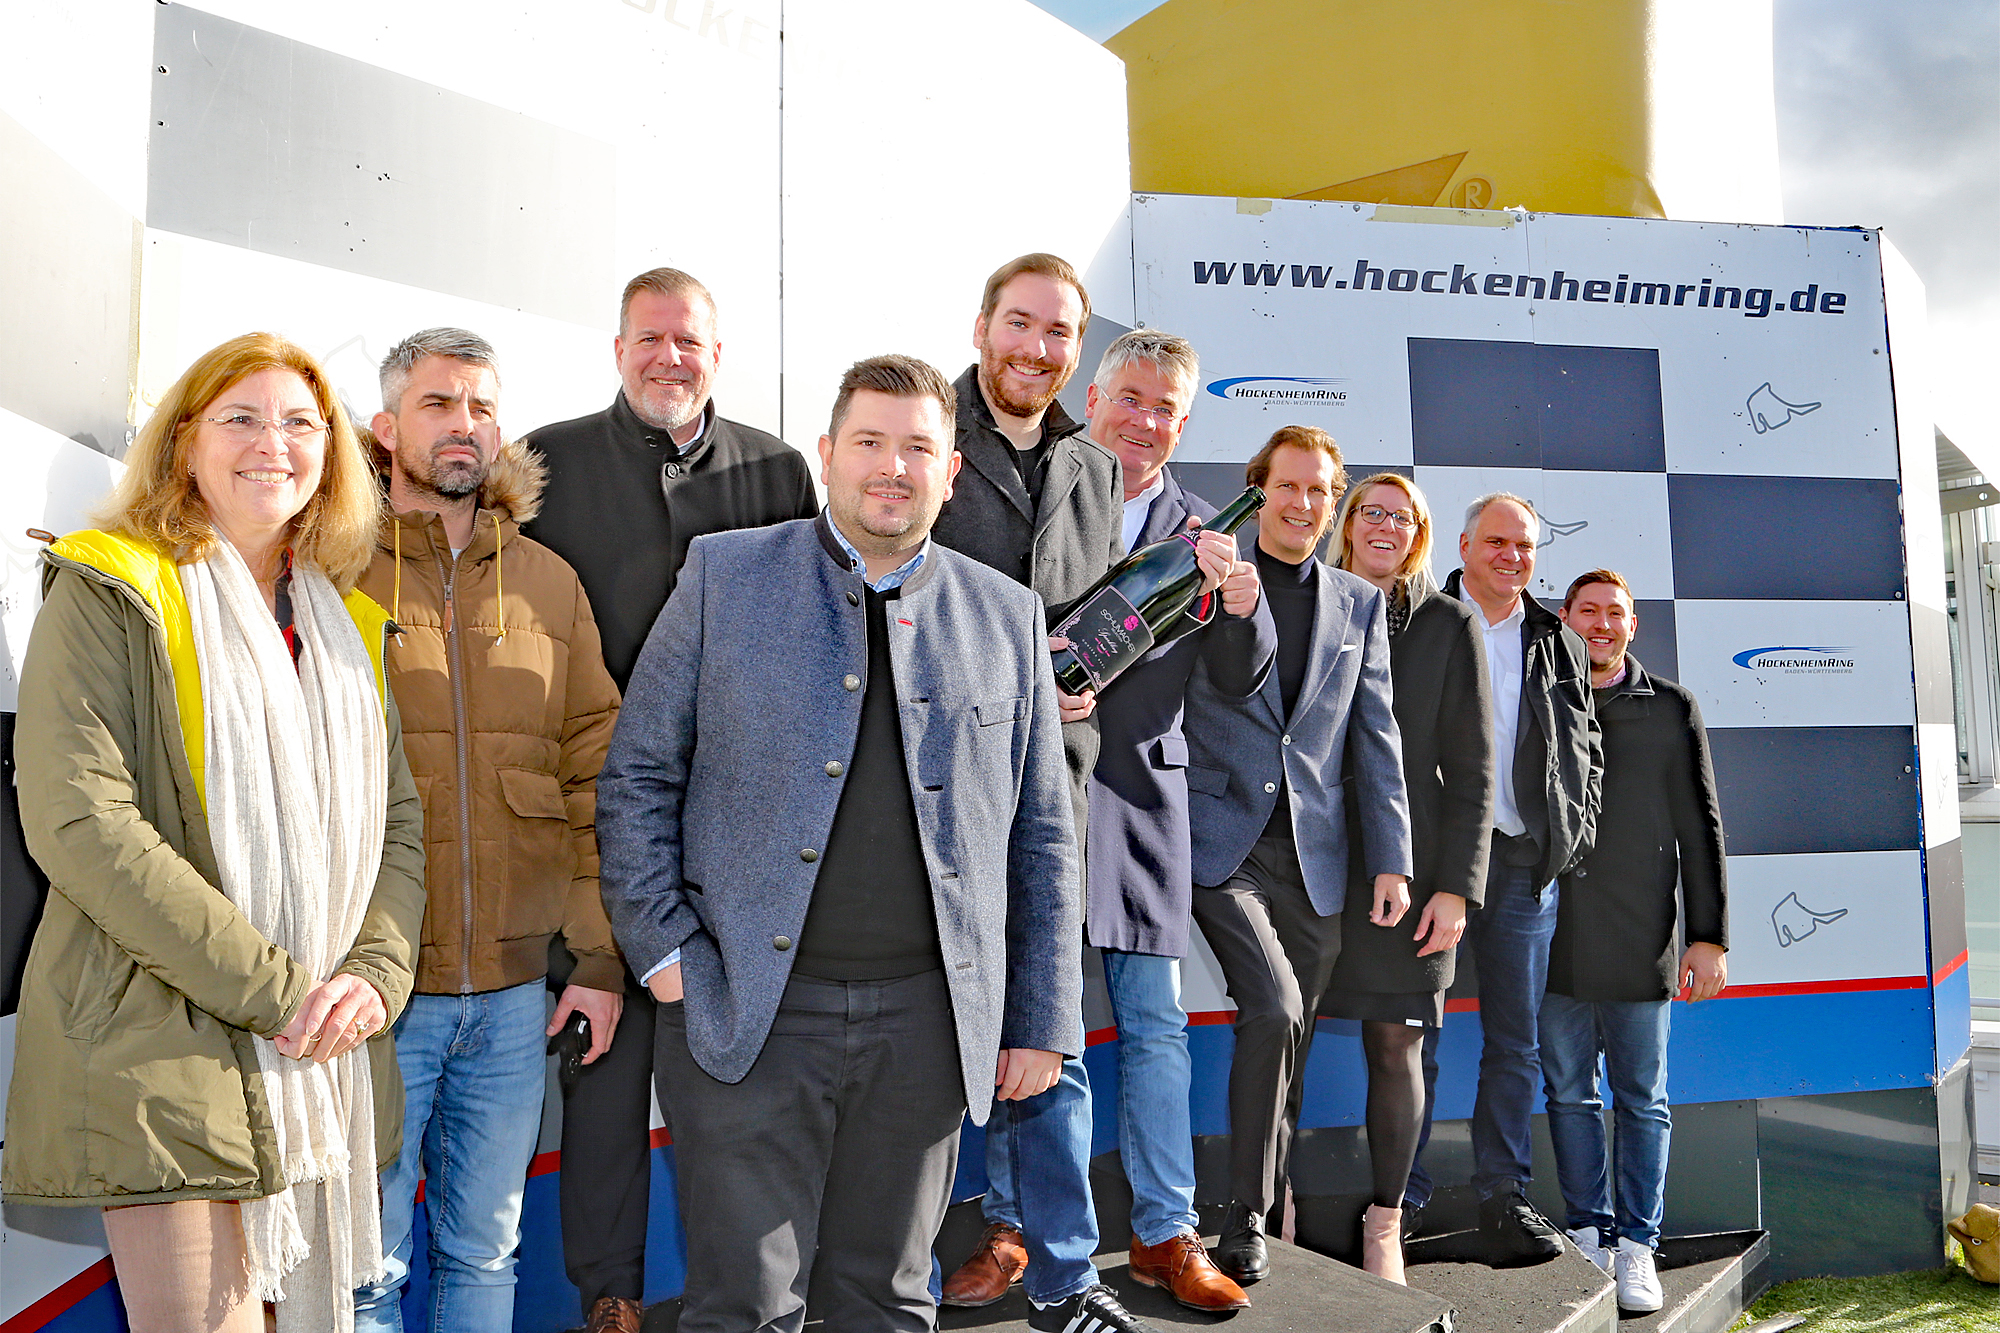 Von links: Bärbel Hesping, Jochen Nerpel, OB Marcus Zeitler, Tobias Vogt MdL, Andreas Sturm MdL, Winfried Mack MdL, Olav Gutting MdB, Heike Brucker, Jorn Teske und Marco Hess.